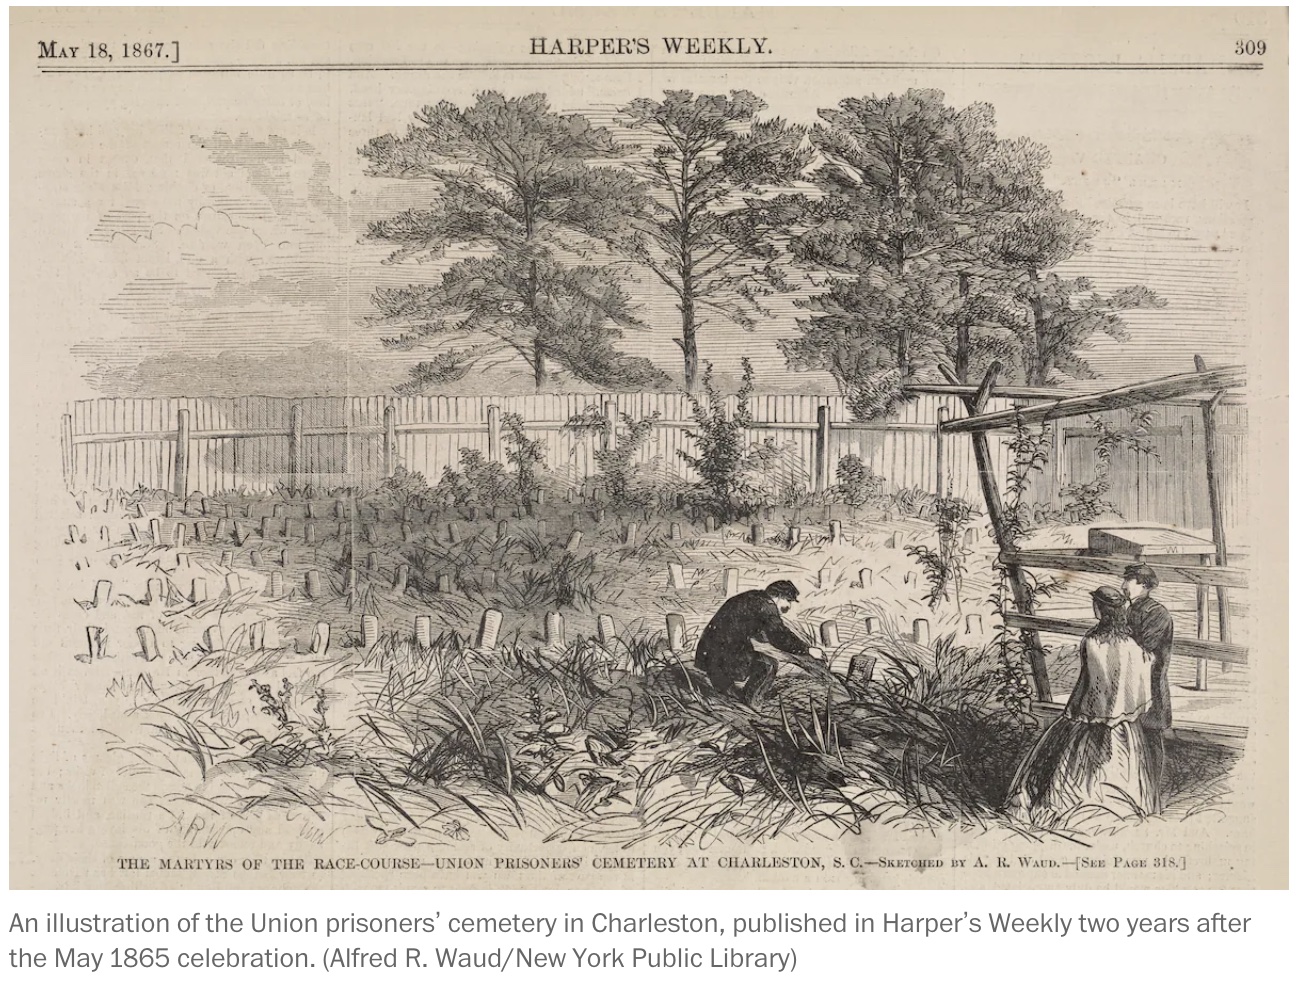 Union prisoner's cemetary in Charleston SC, Harper's Weekly, 1867